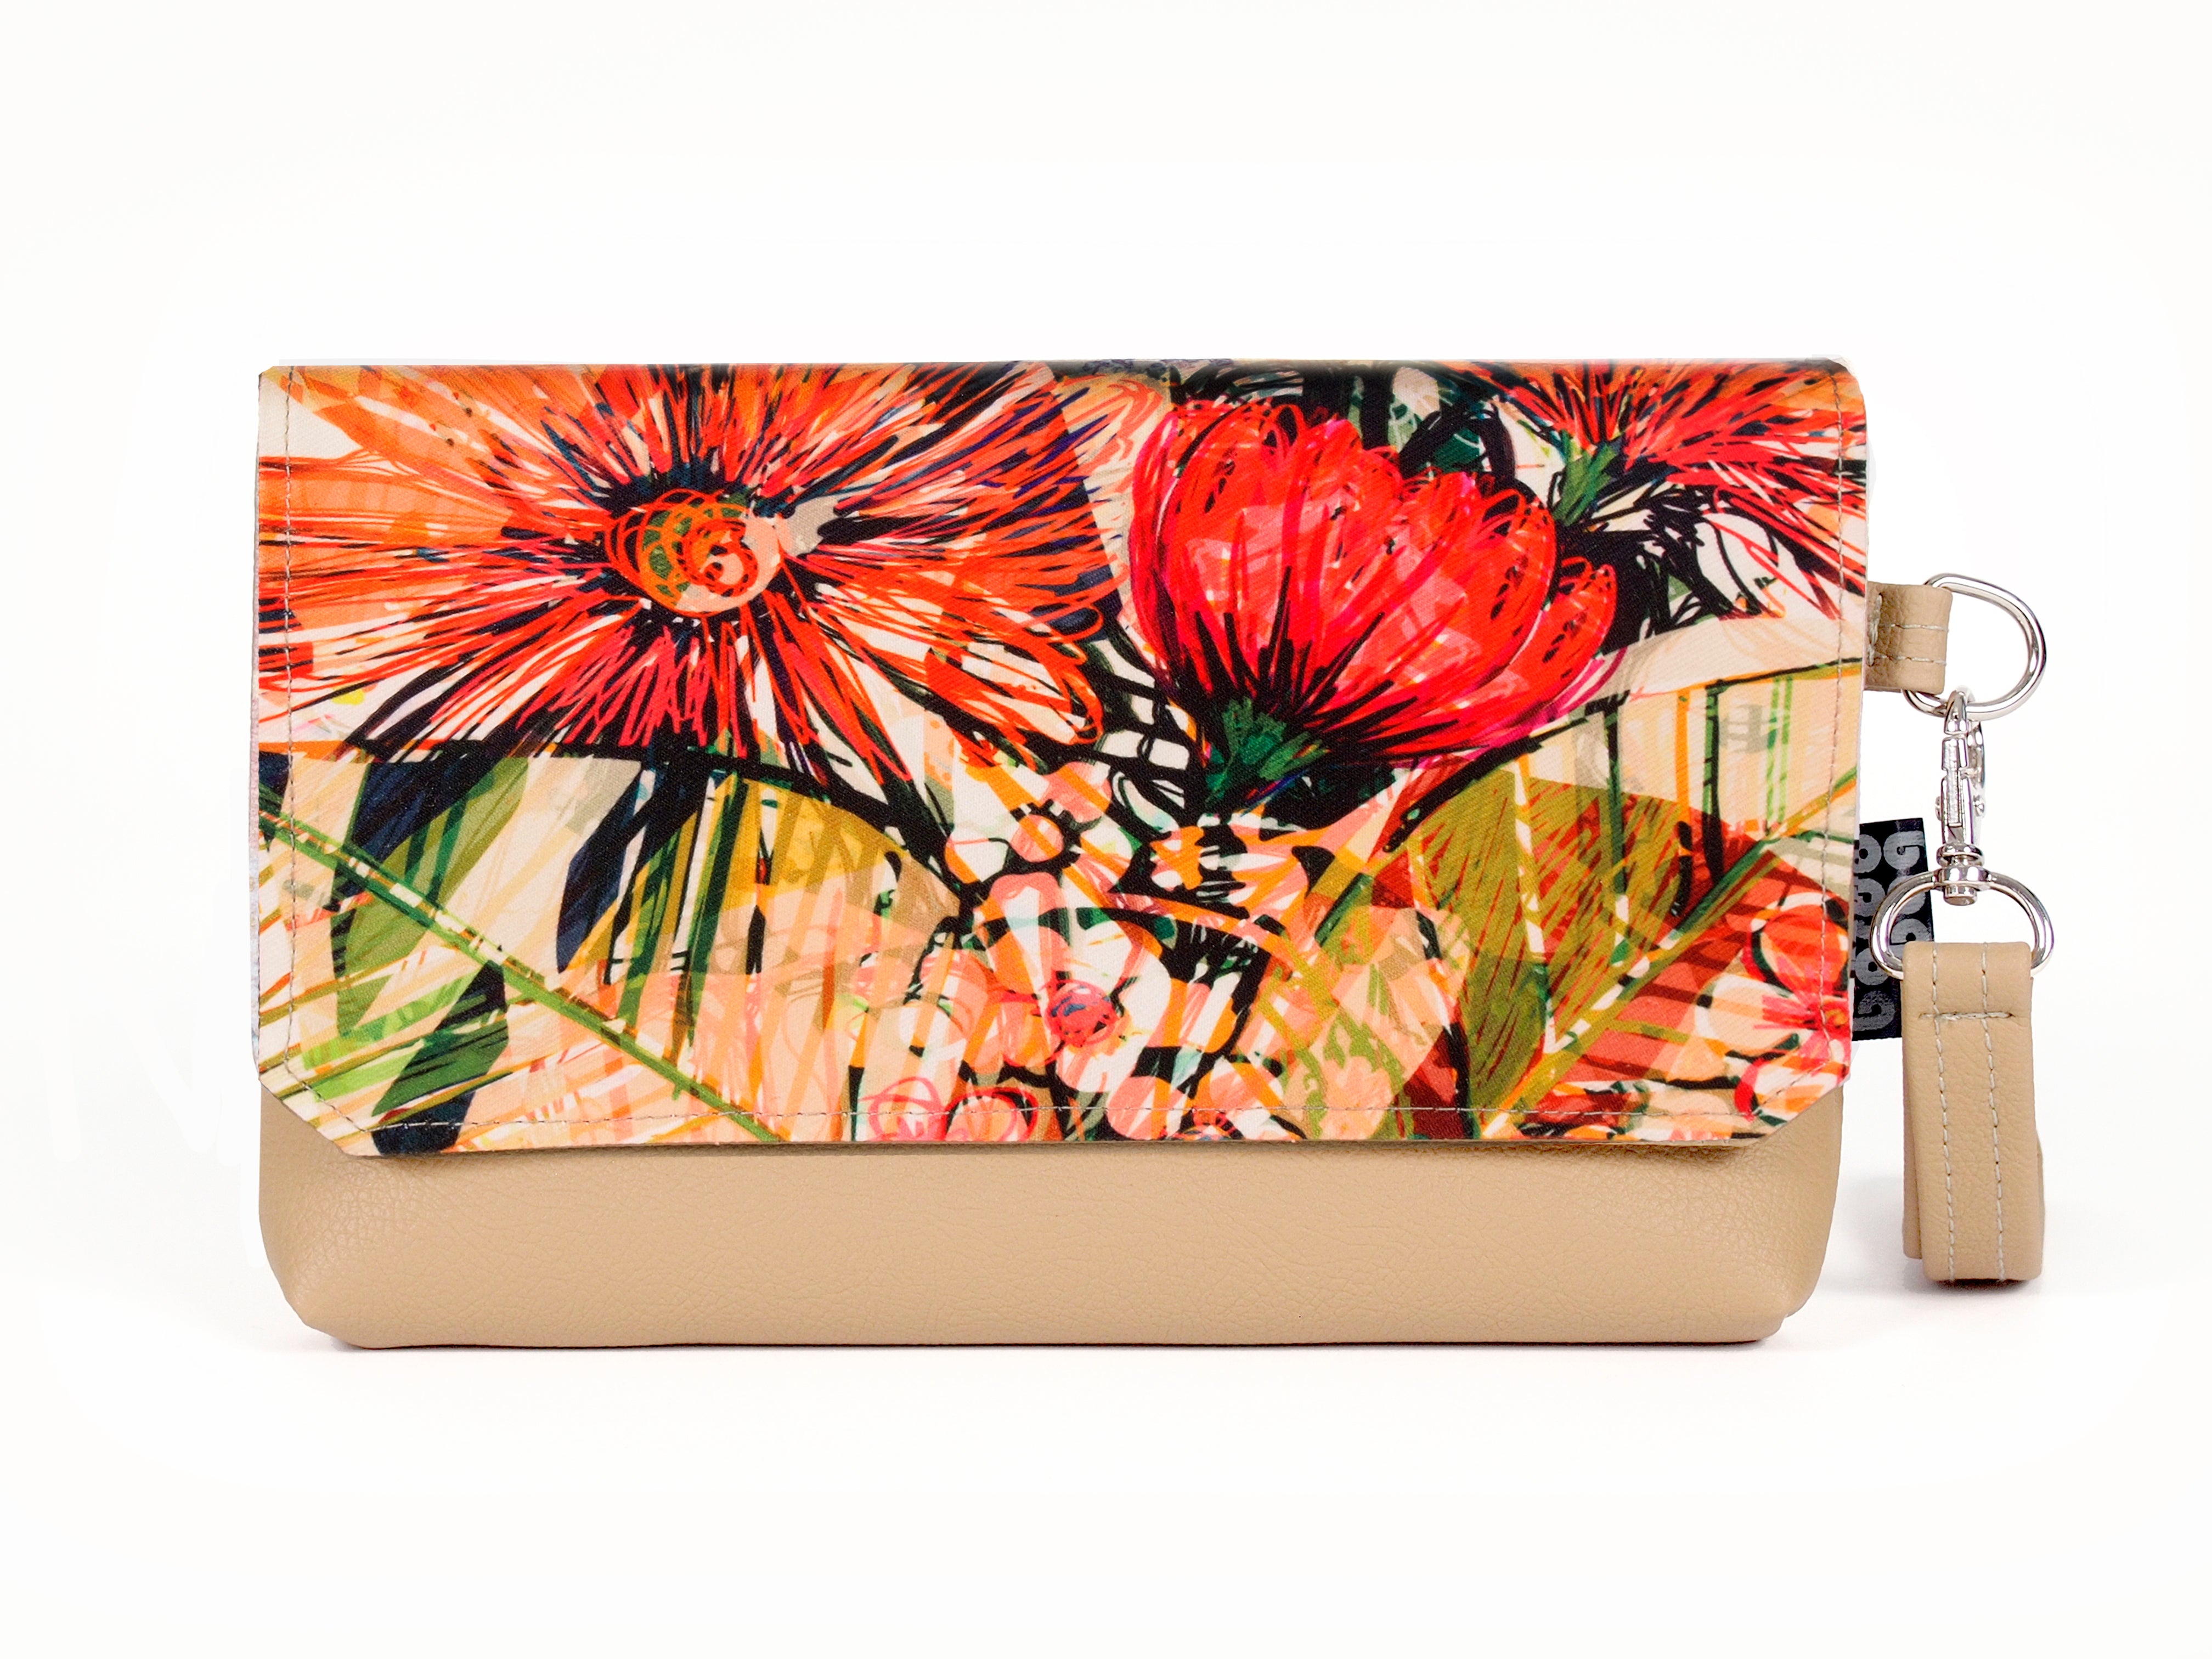 Bardo wallet – Fragrant garden - Premium wallet from BARDO ART WORKS - Just lv42.00! Shop now at BARDO ART WORKS